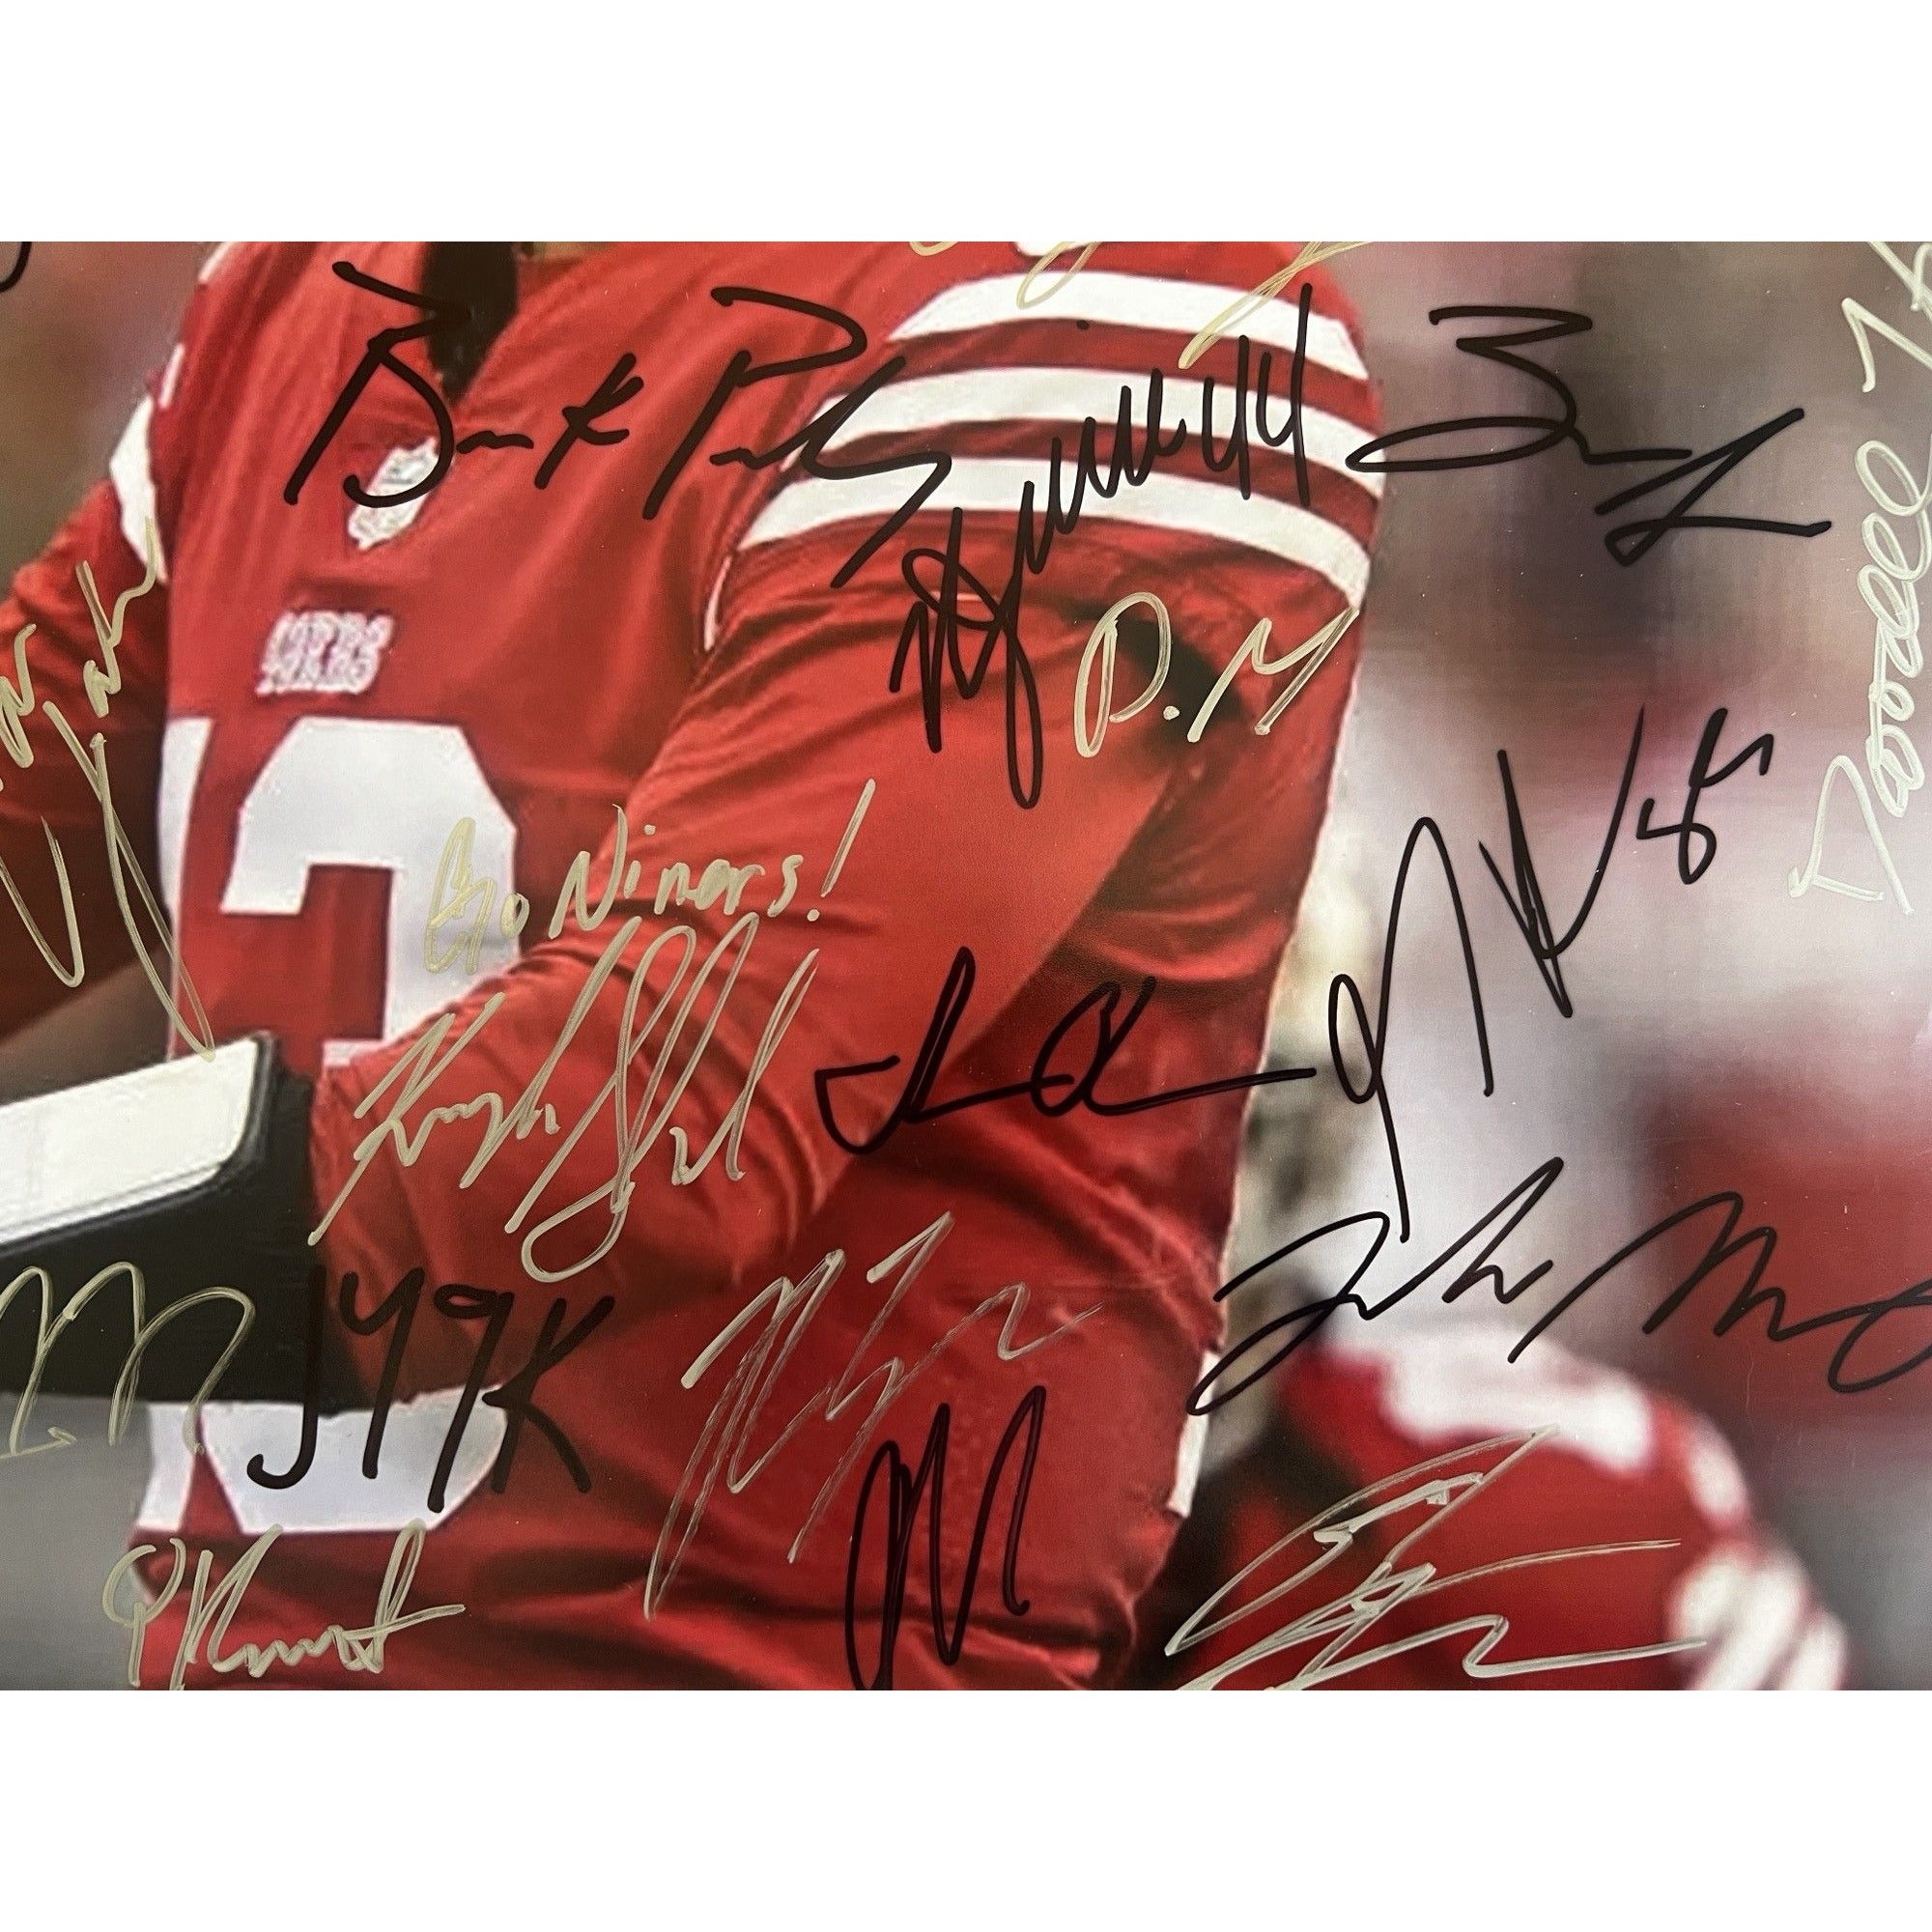 San Francisco 49ers Brock Purdy Christian McCaffrey Deebo Samuel NFC champions 2023-24 16x20 photo signed with proof